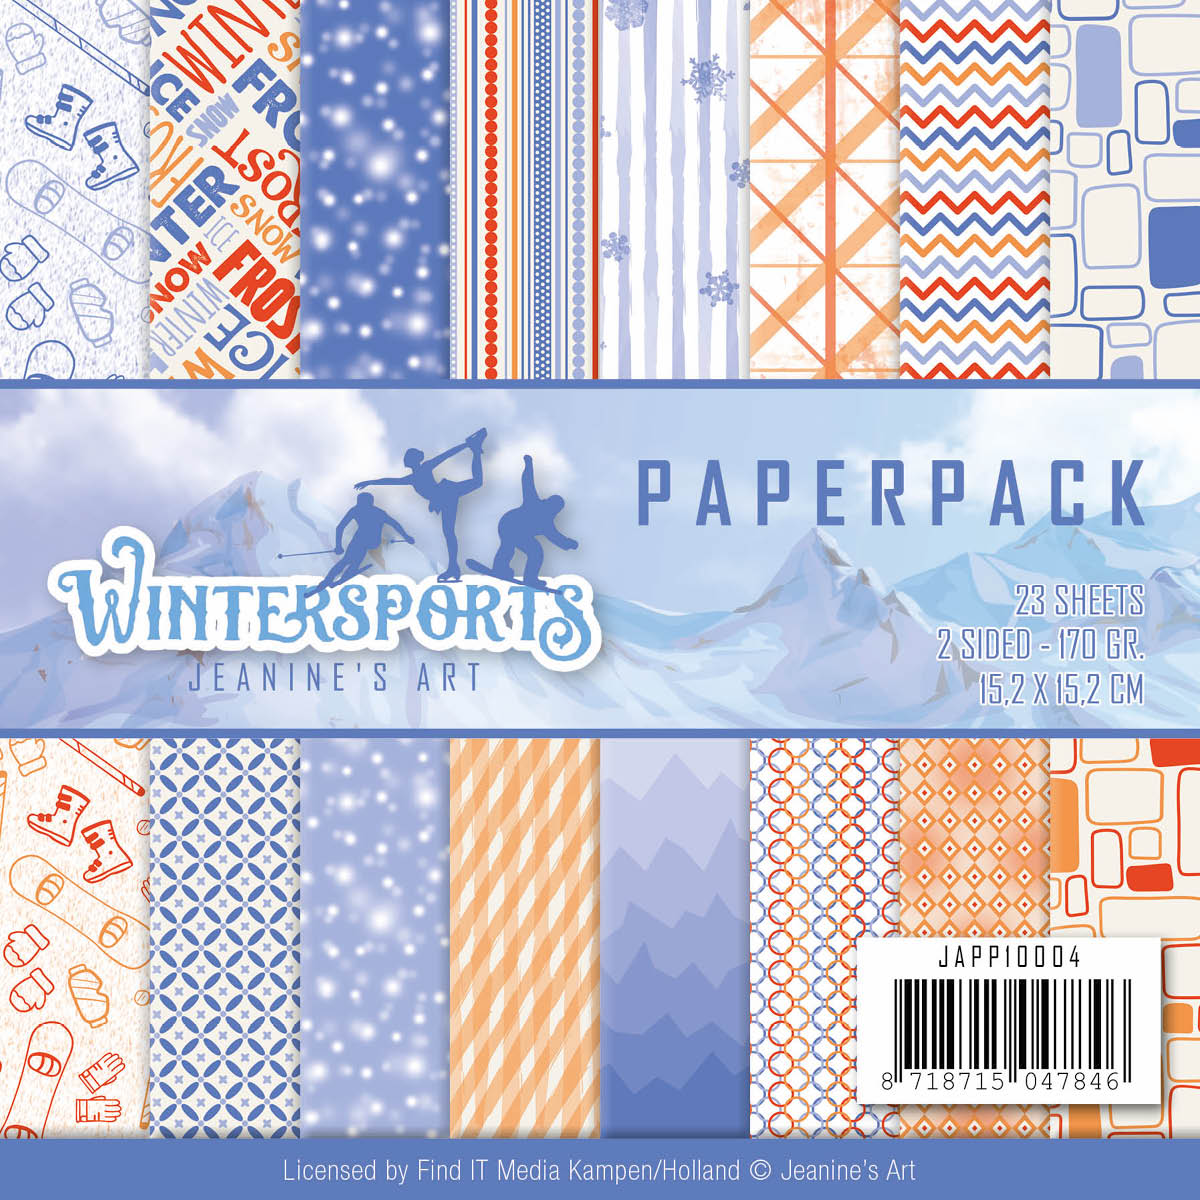 Jeanine's Art Wintersports Paper Pack